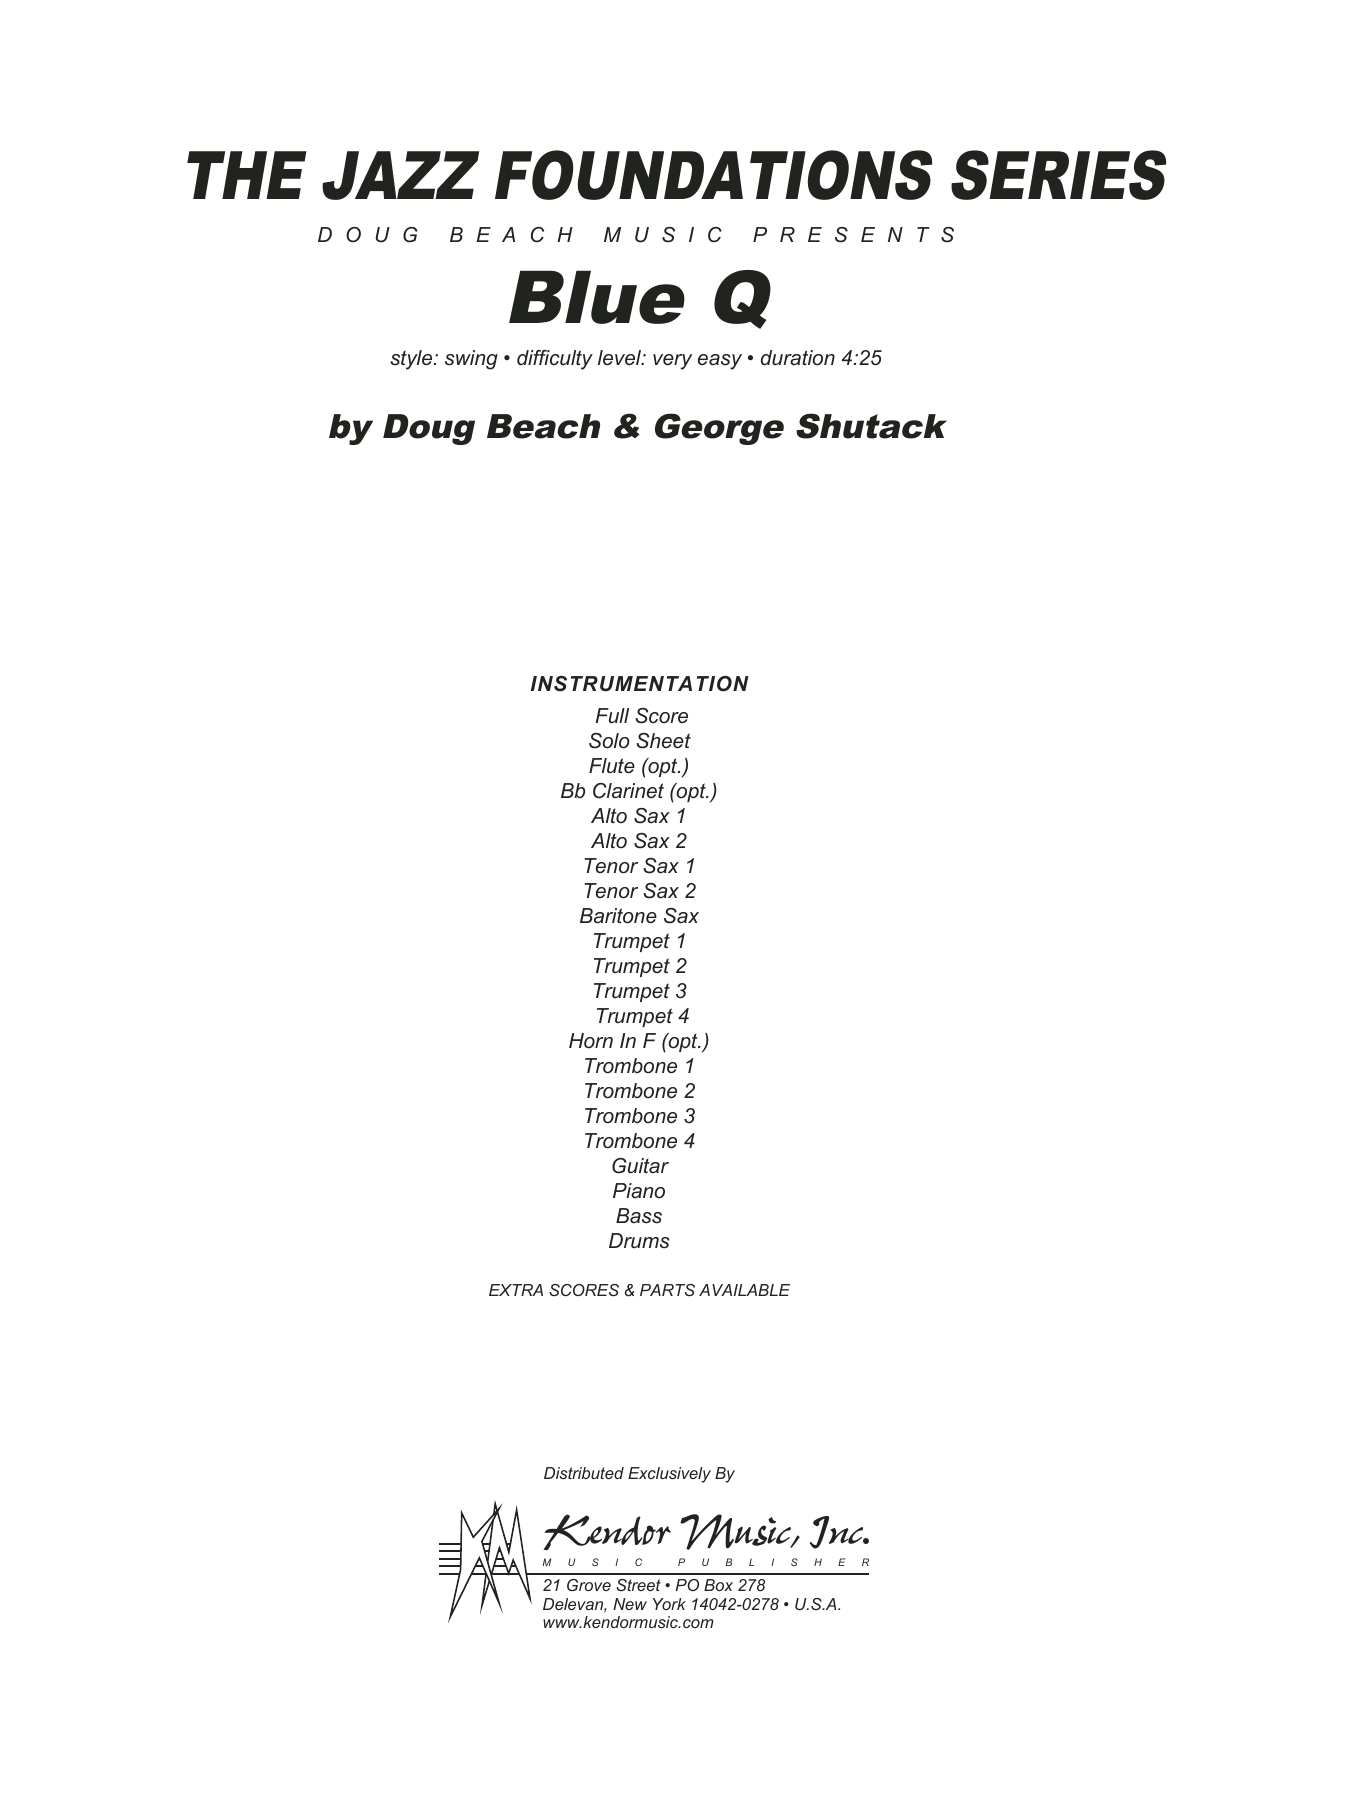 Download Doug Beach Blue Q - Full Score Sheet Music